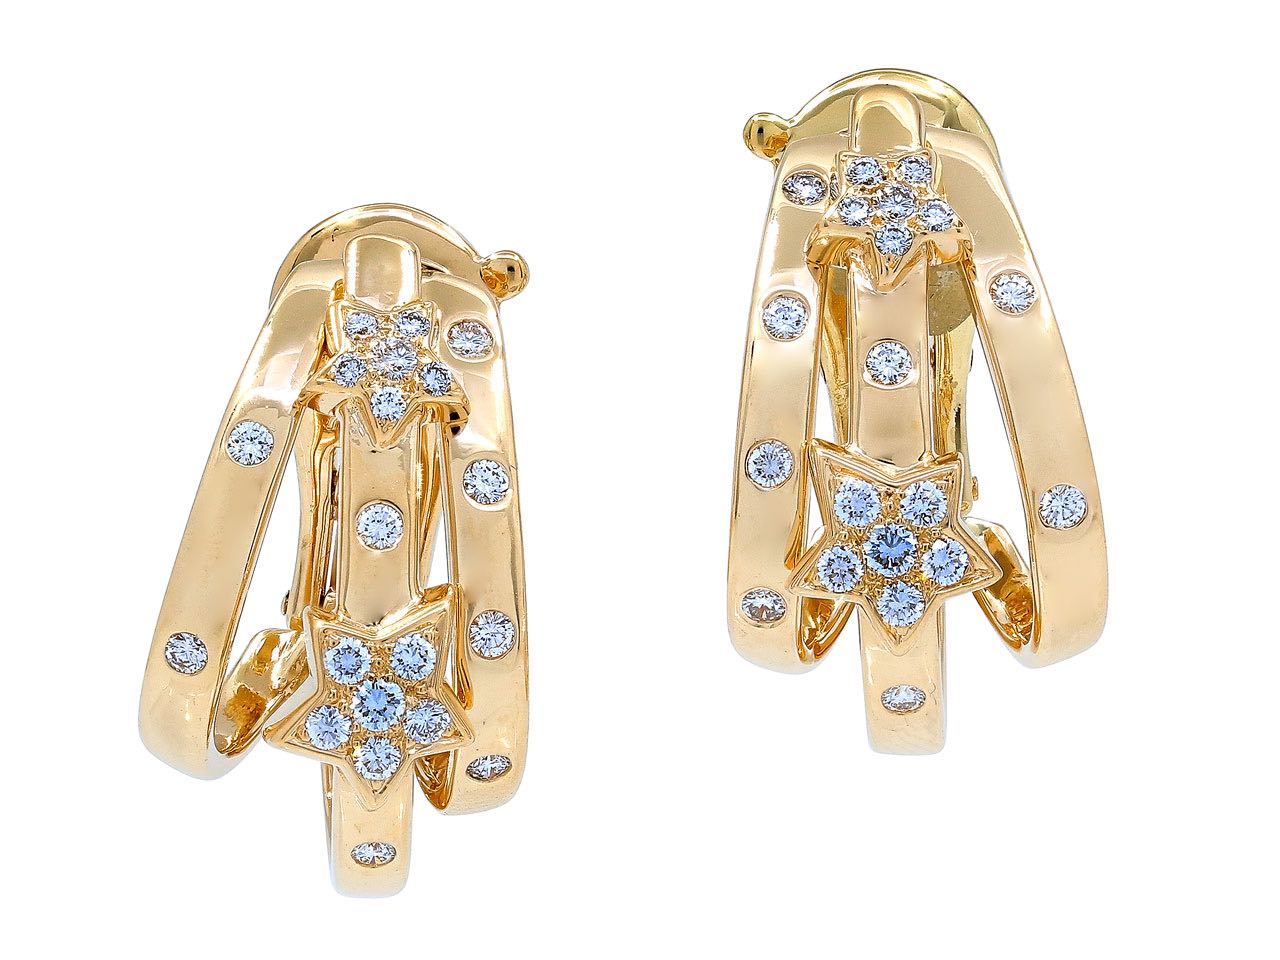 Chanel 18K White Gold Diamond Comete Geode Medium Stud Earrings